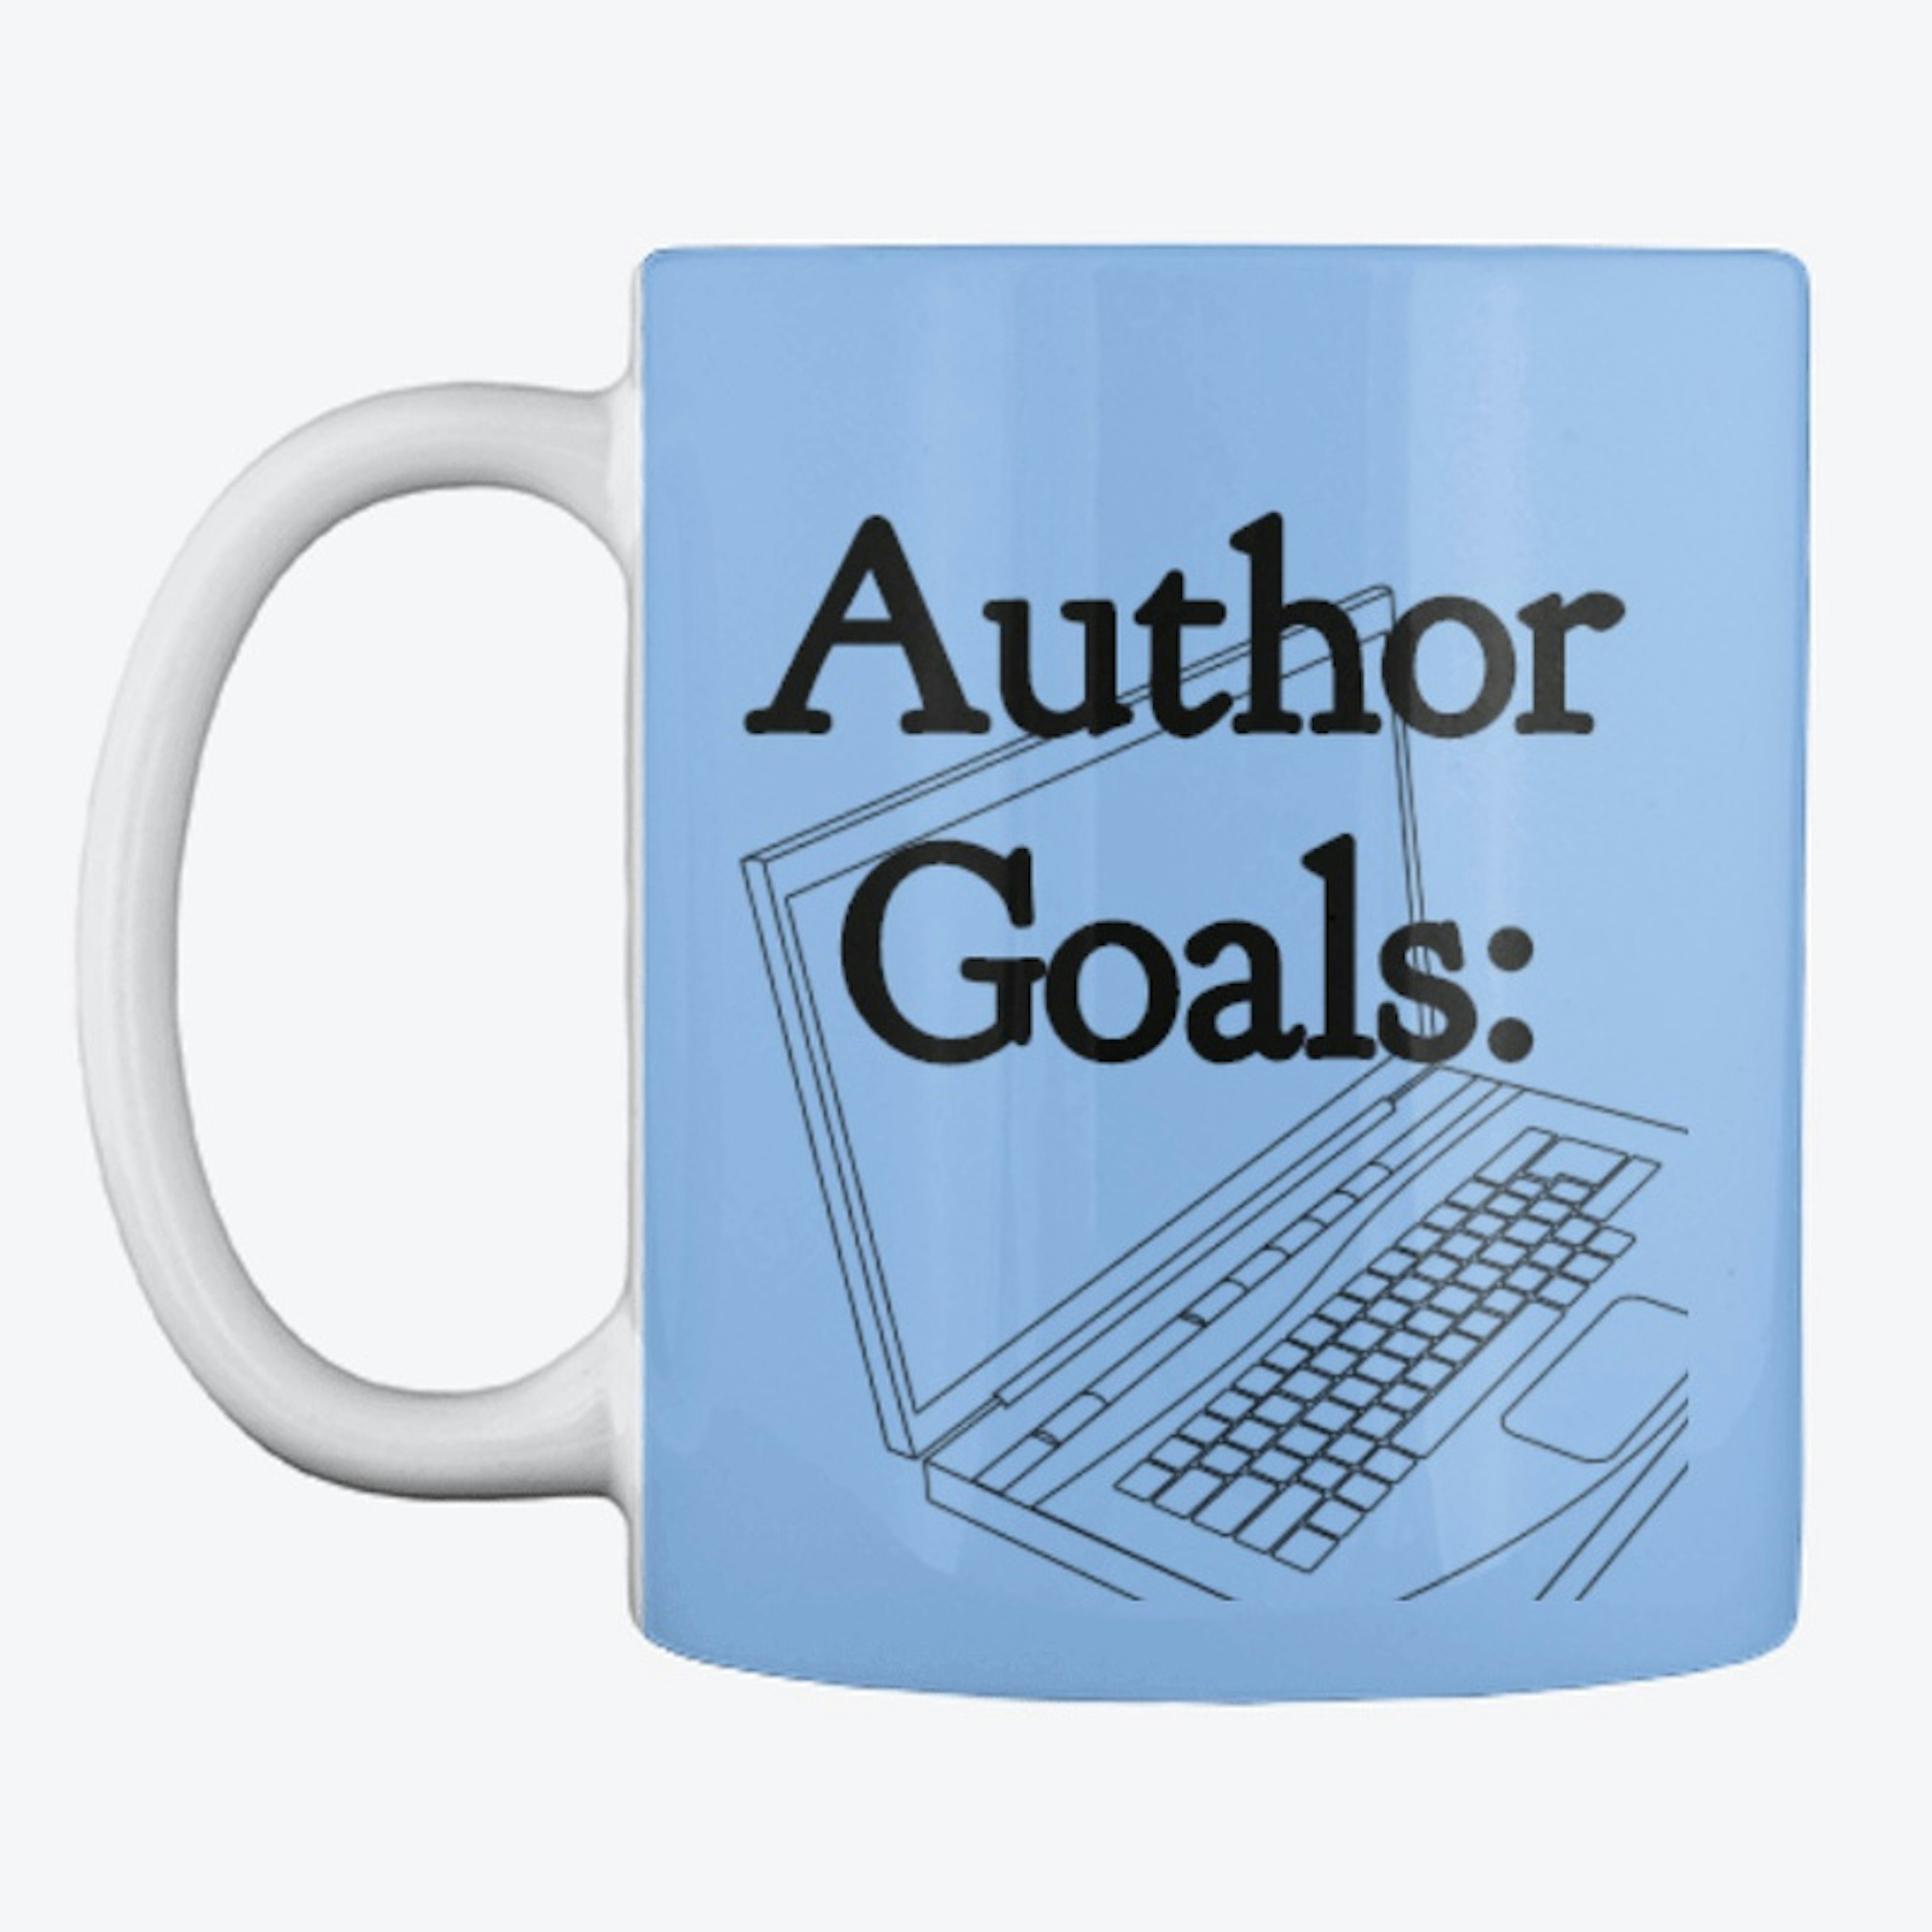 Authors have Goals